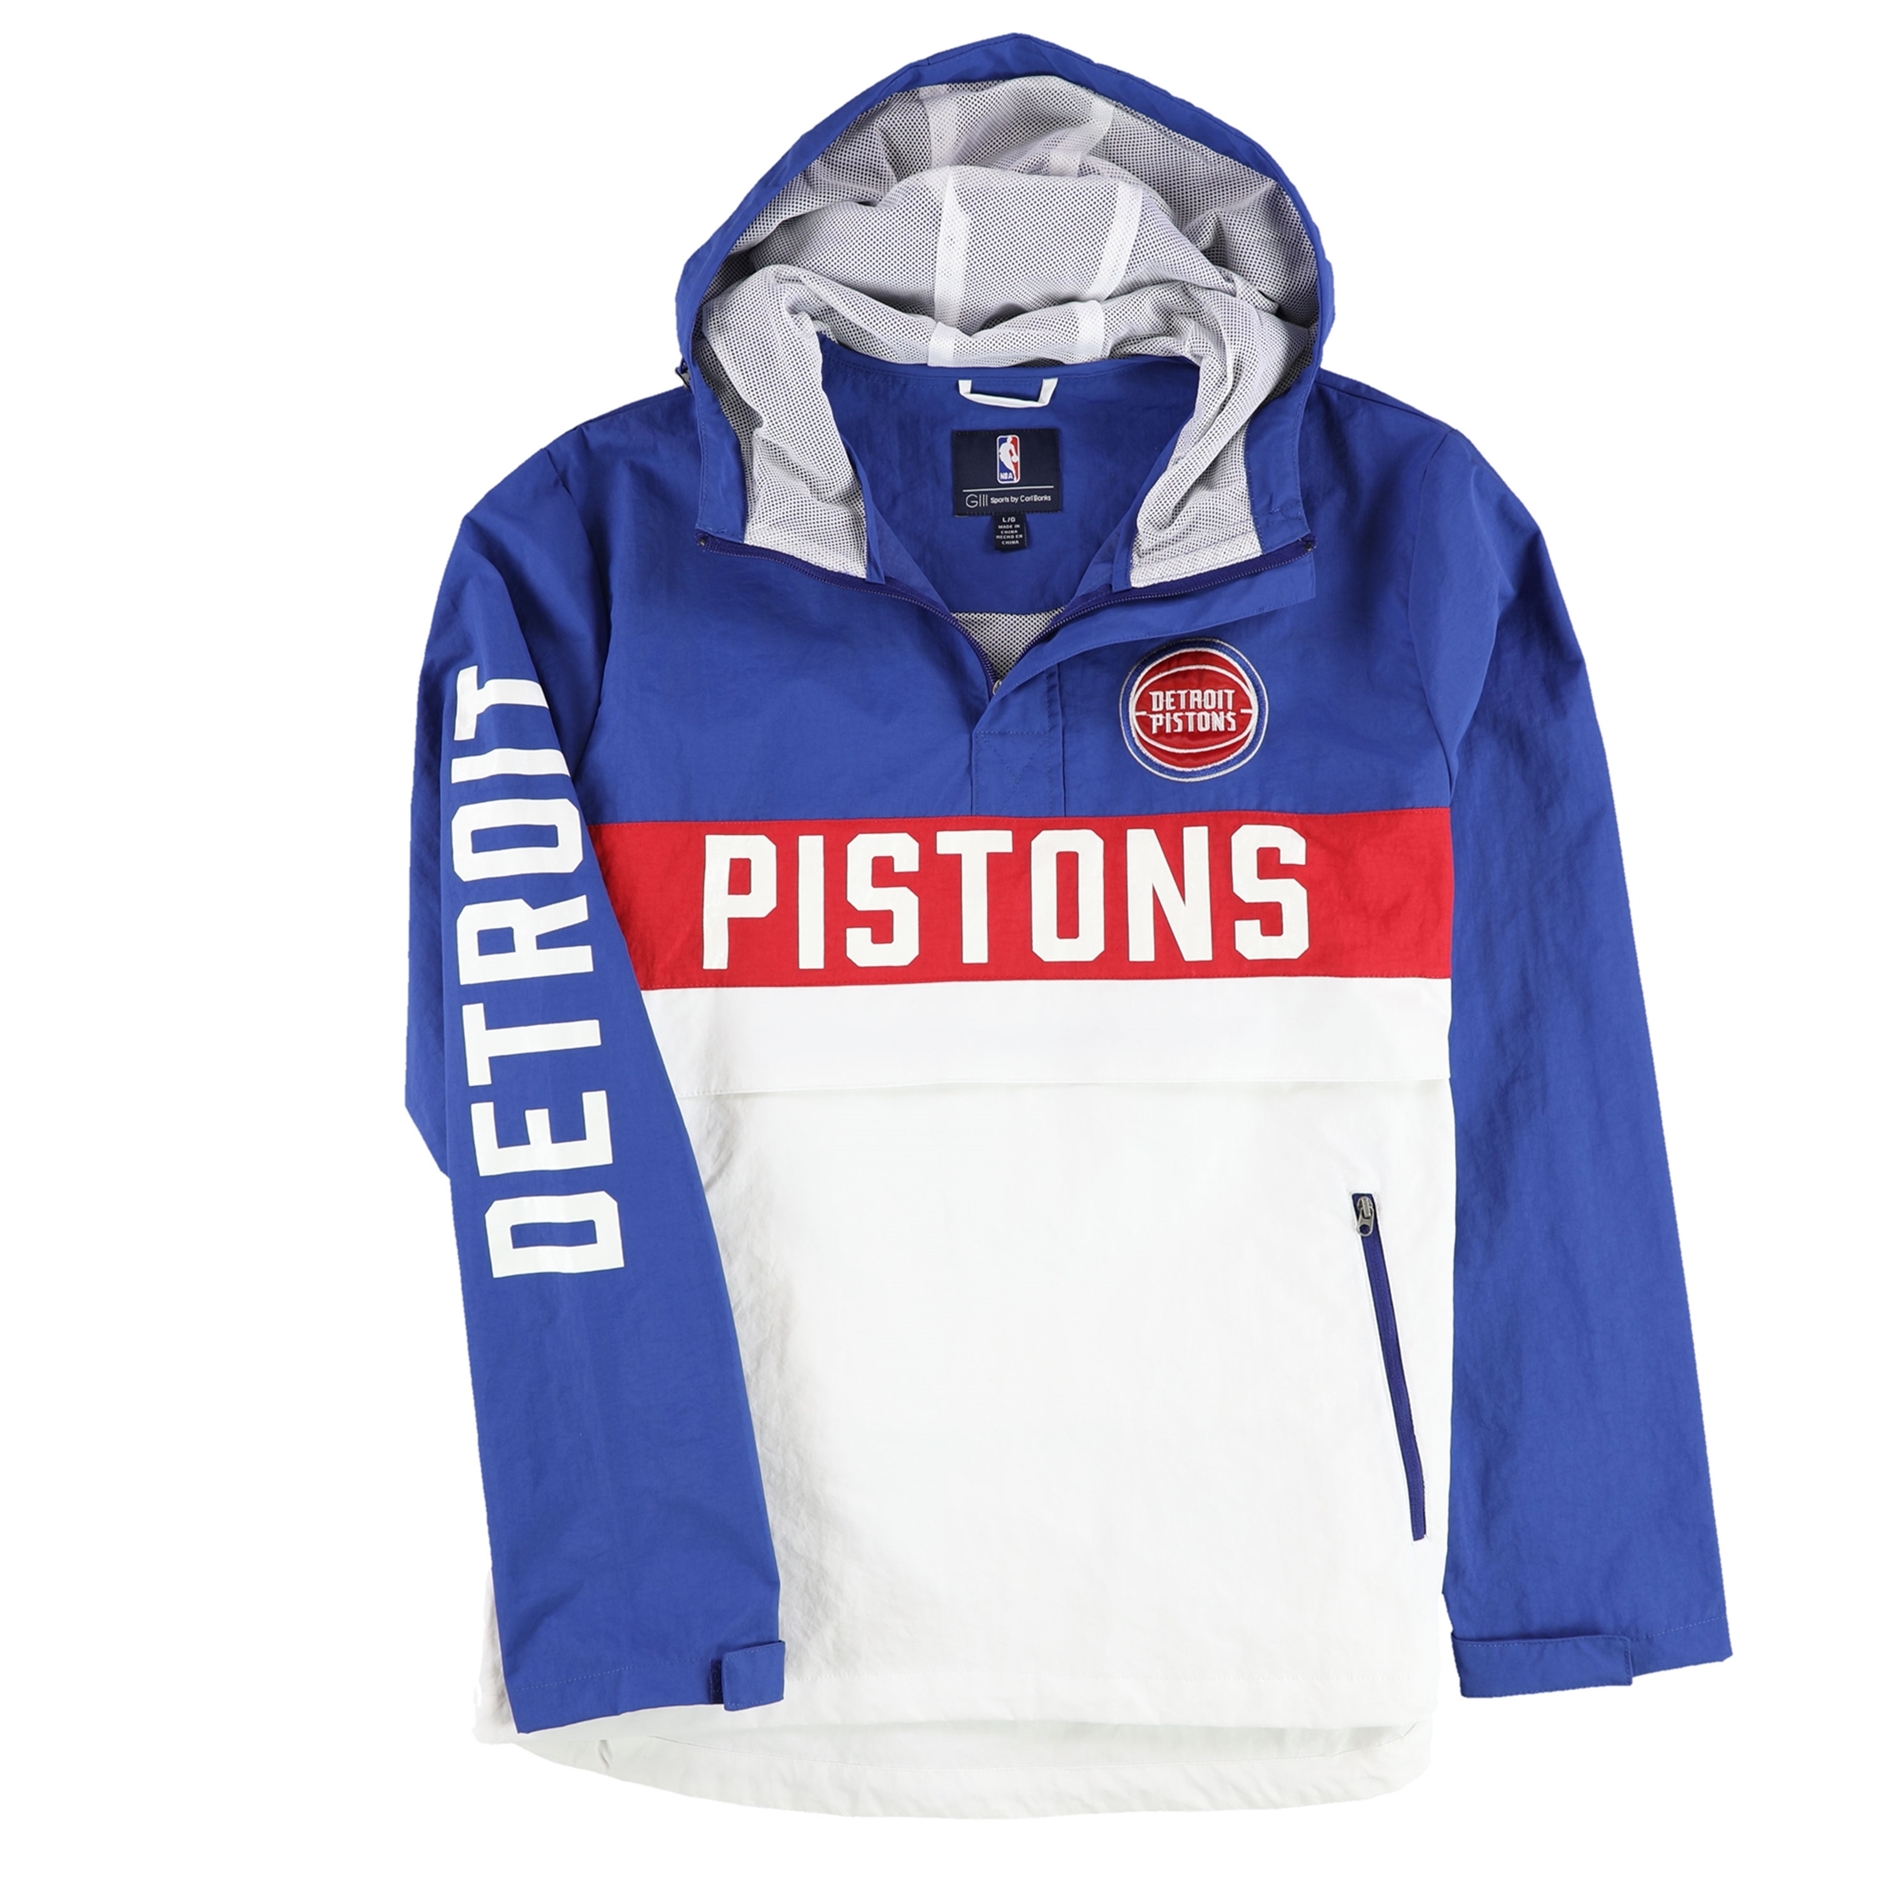 G-Iii Sports Mens Detriot Pistons Windbreaker Jacket